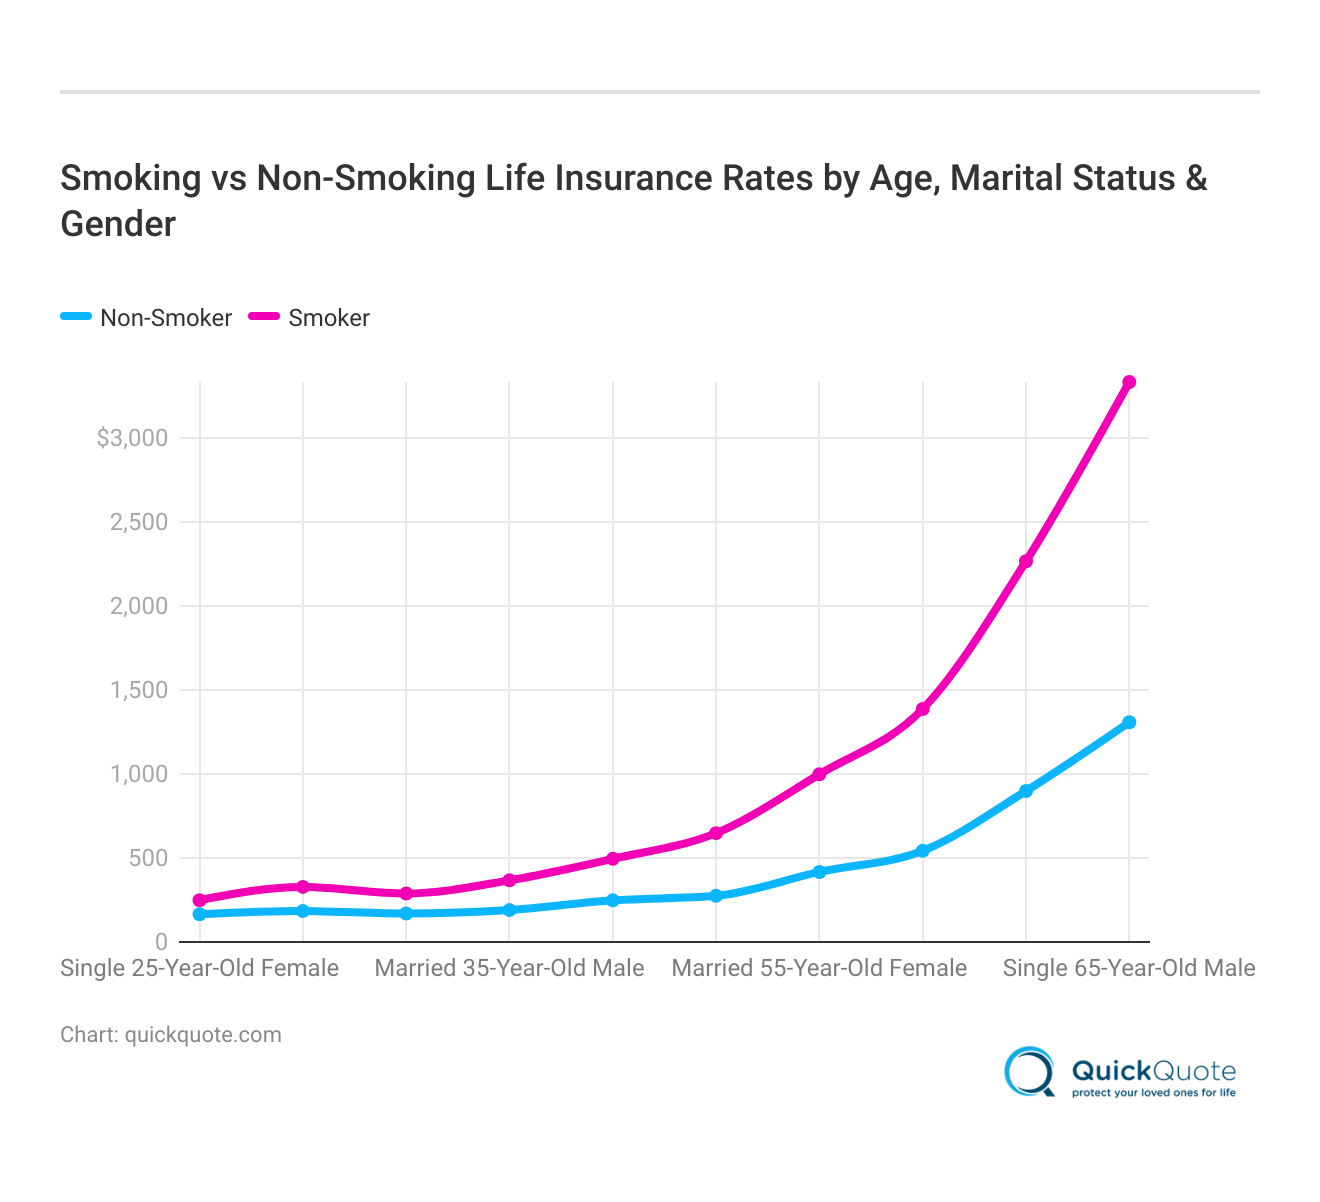 <h3>Smoking vs Non-Smoking Life Insurance Rates by Age, Marital Status & Gender</h3>